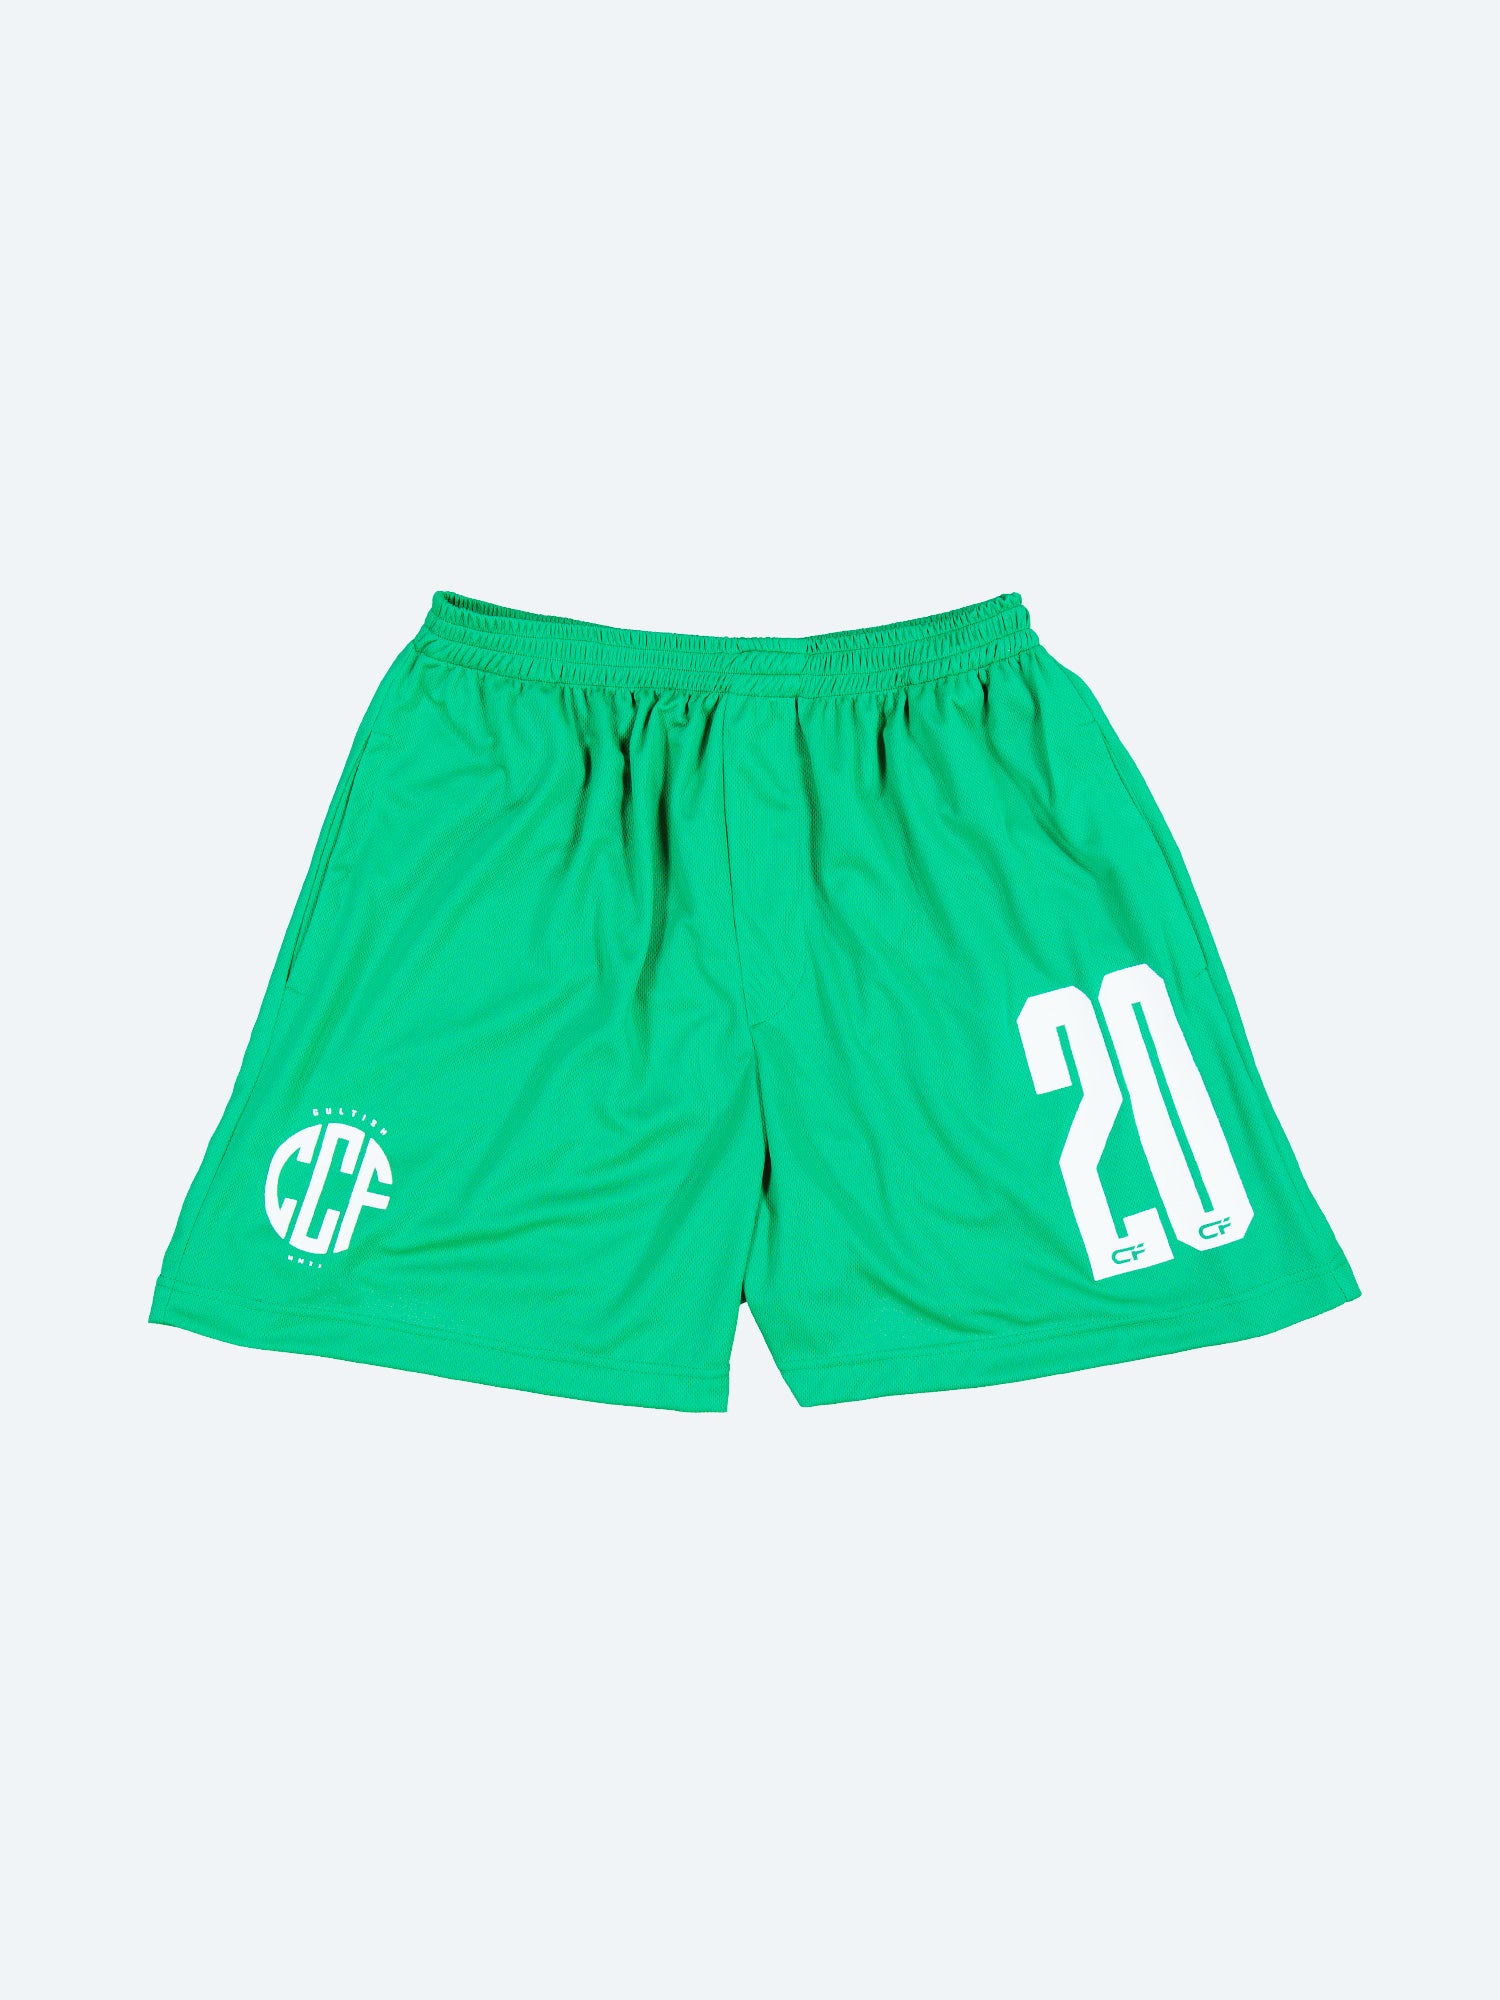 CCF Home Shorts / Emerald